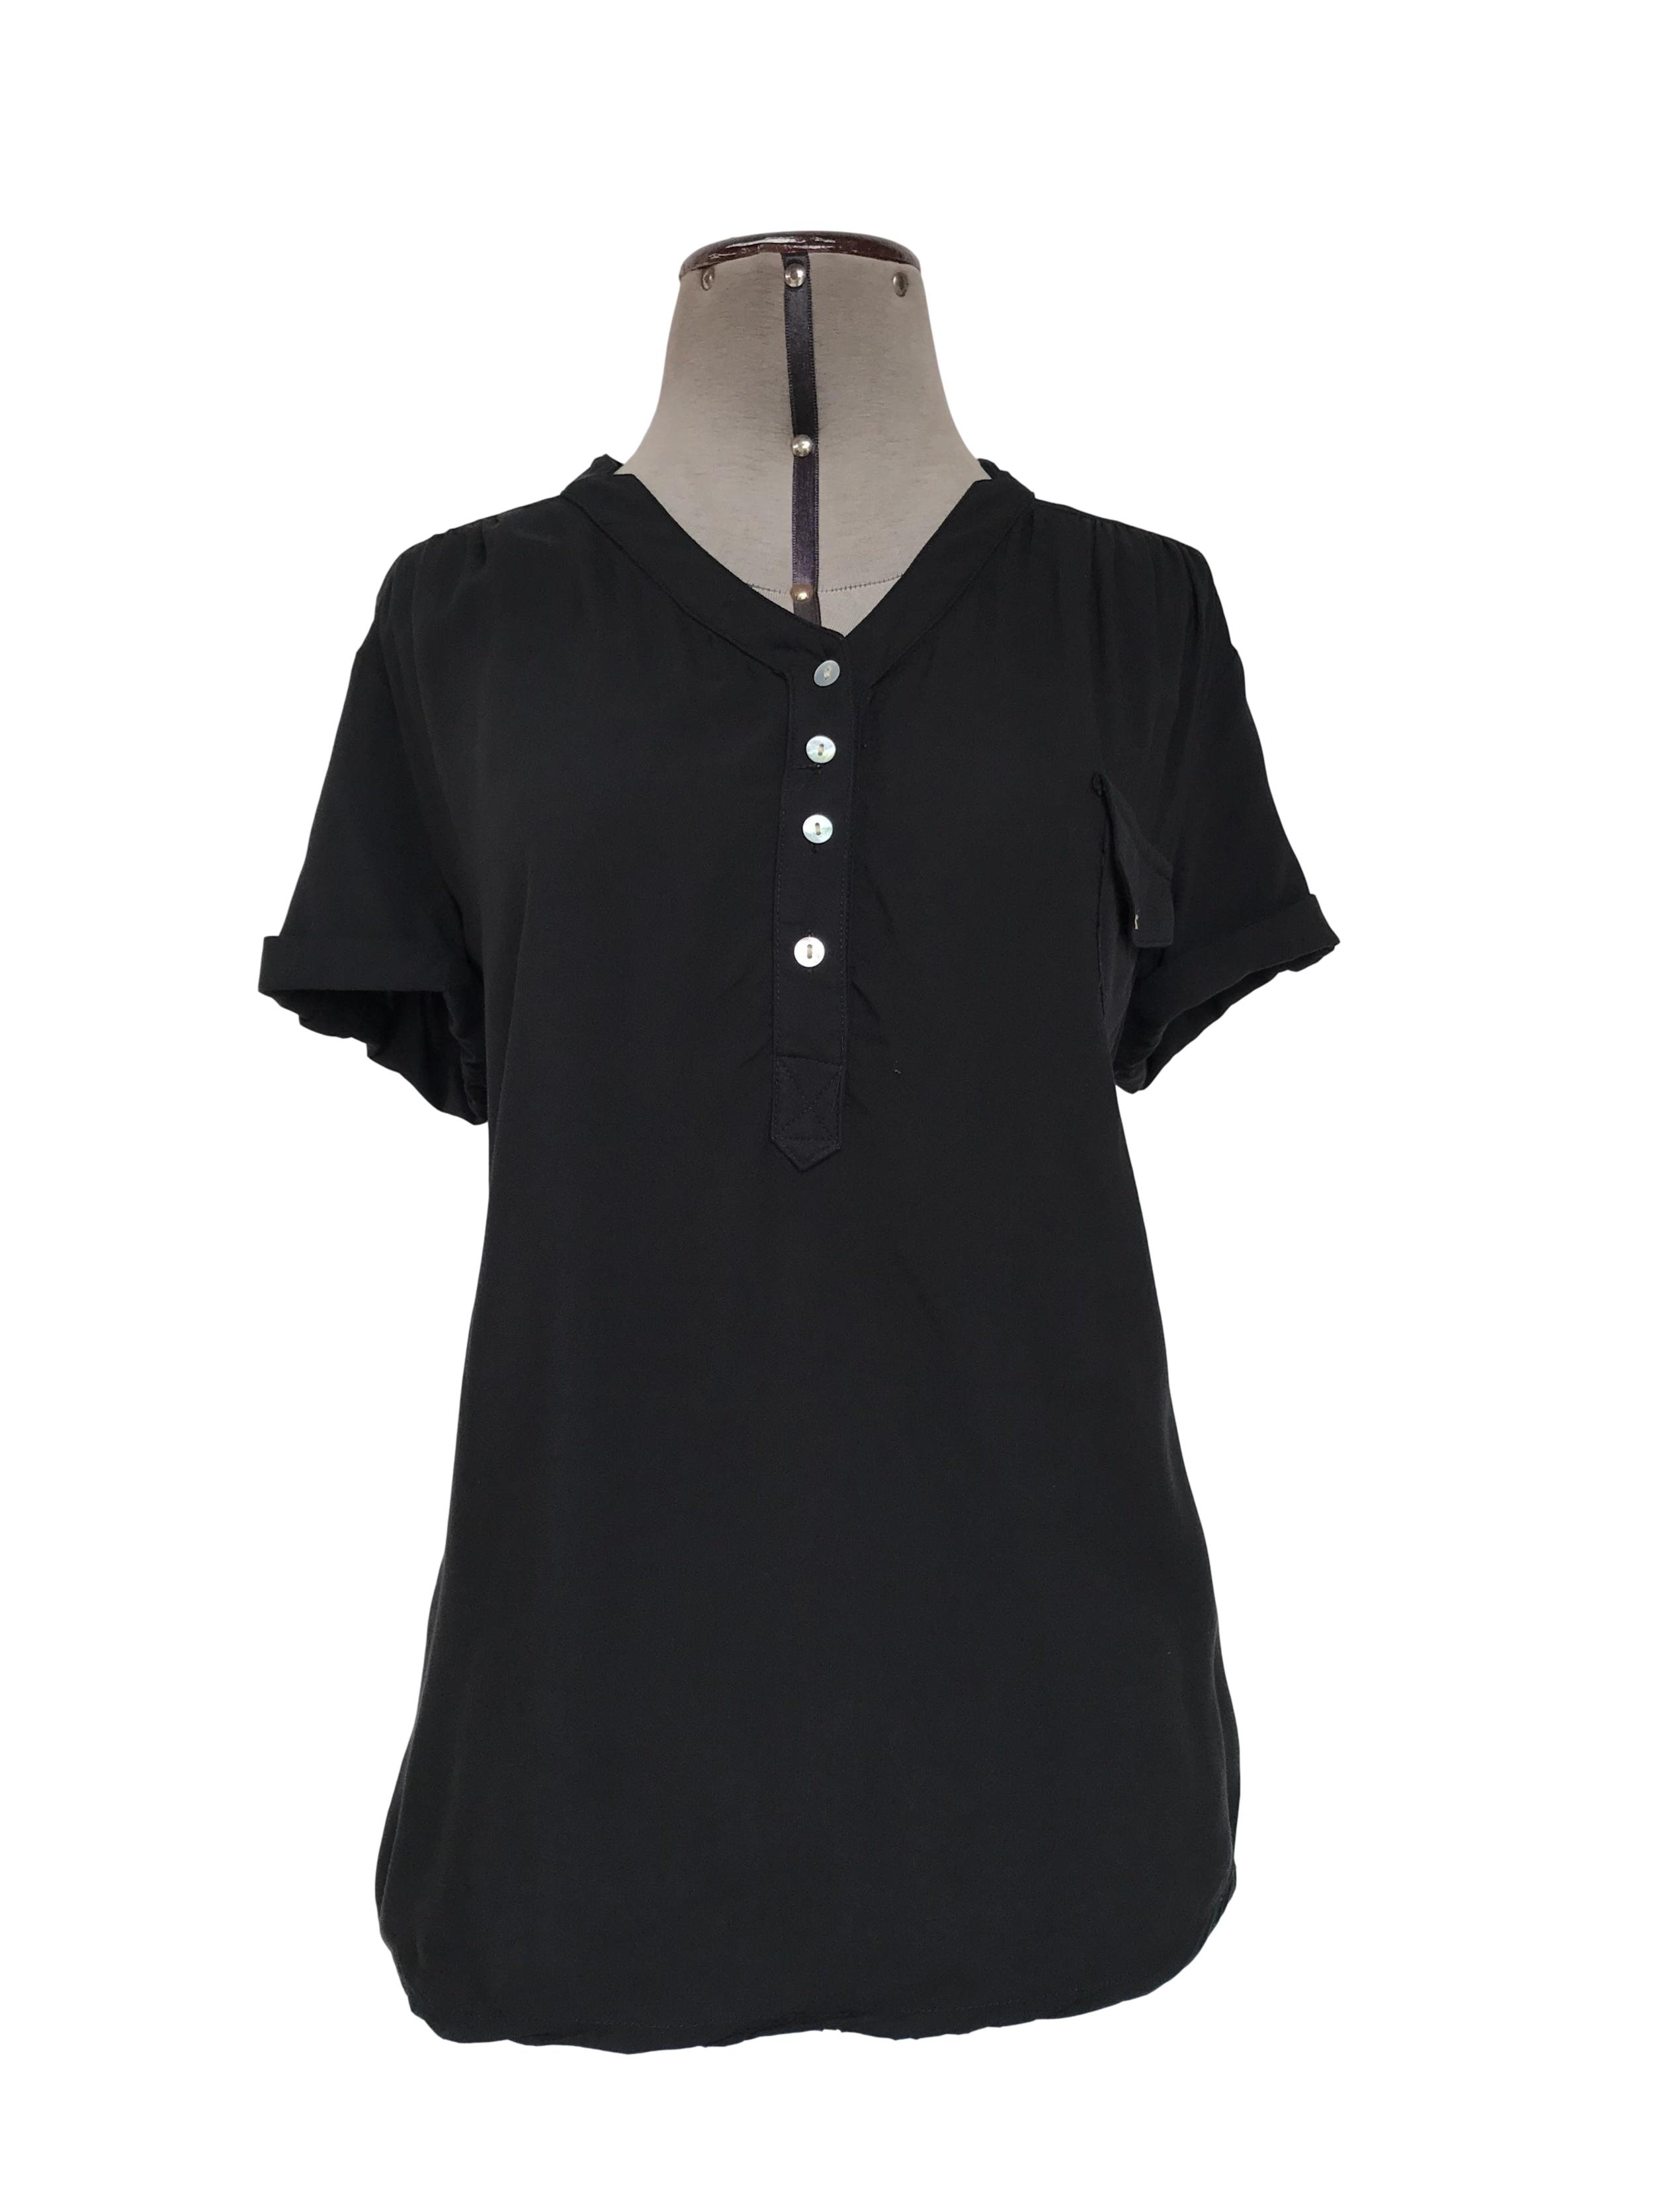 Blusa negra de tela fresca tipo chalis, botones nacarados en el escote, bolsillo y mangas regulables con botón
Talla M